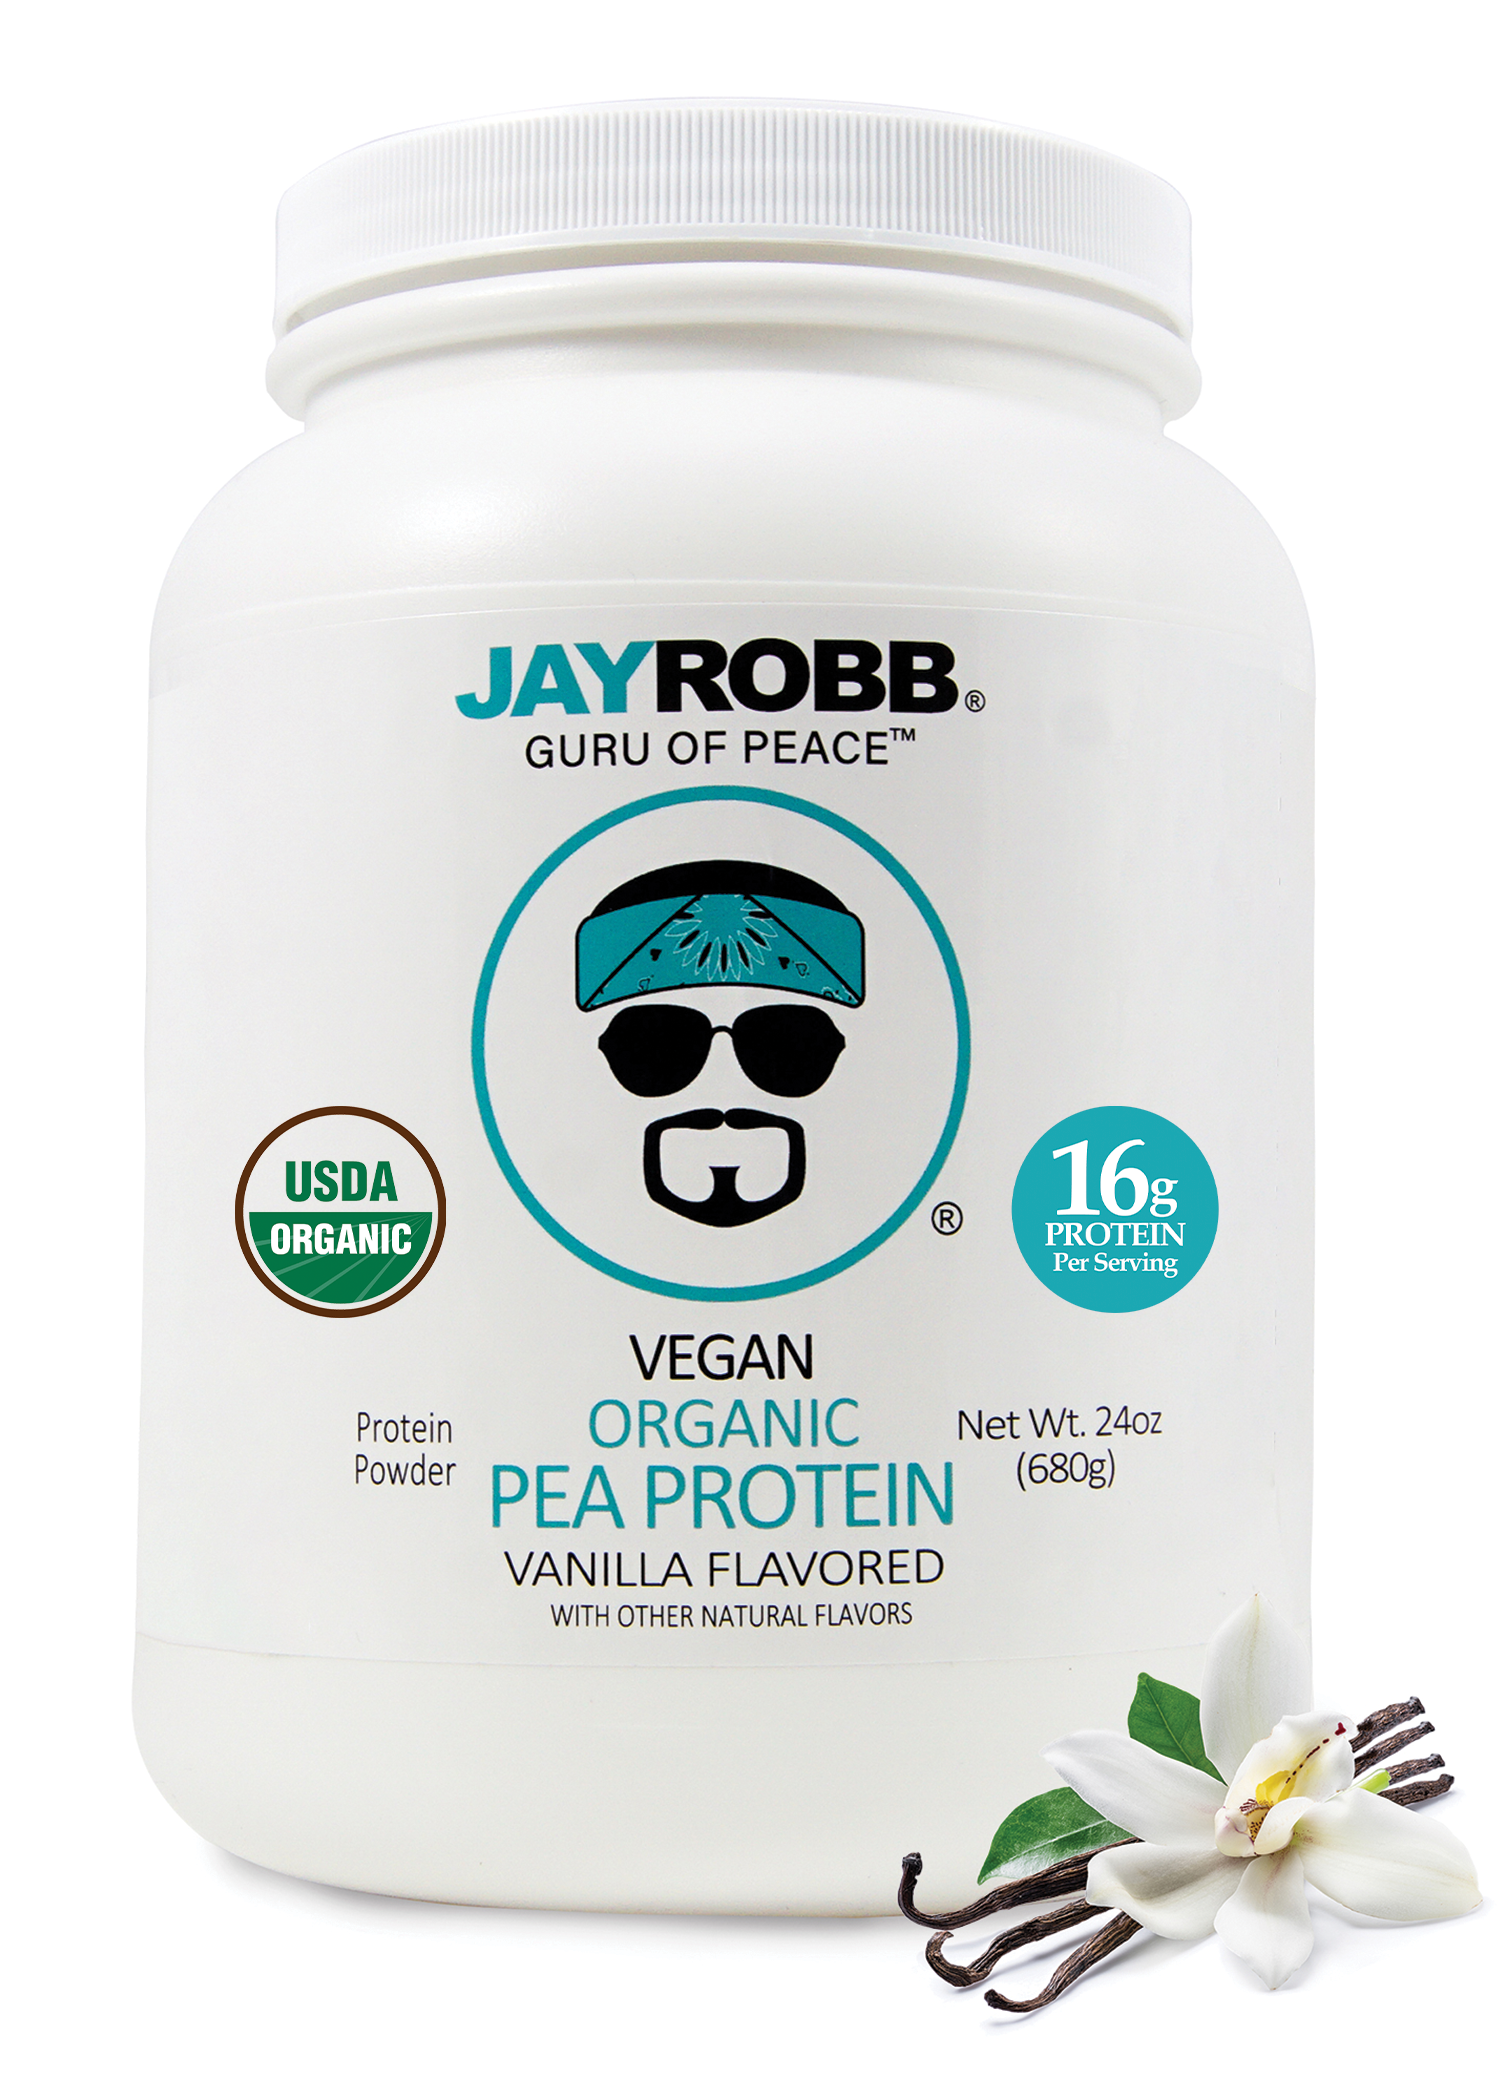 Jay Robb Vegan Pea Protein